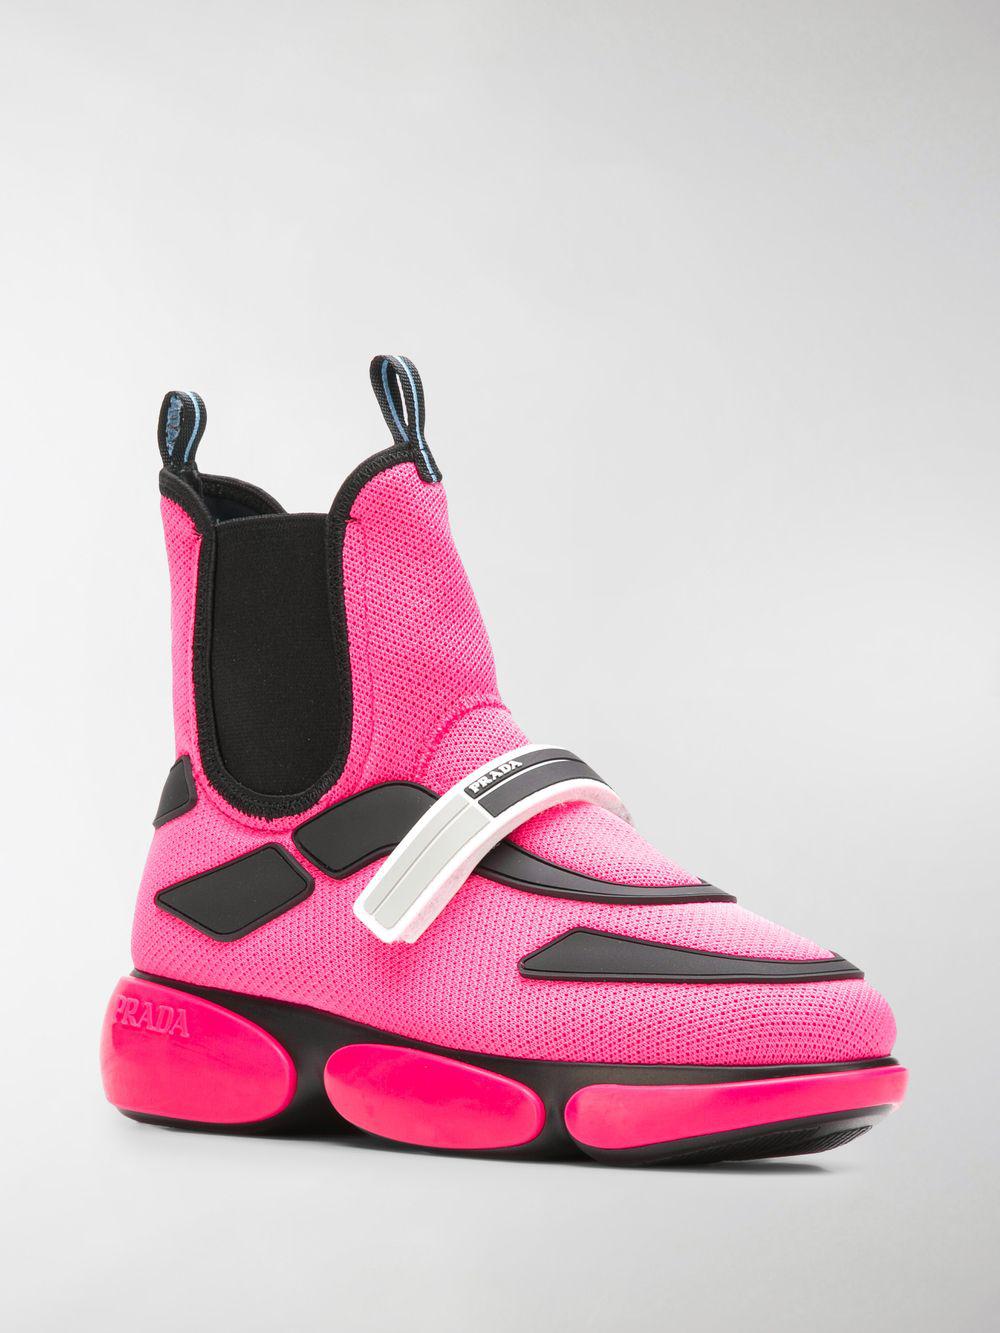 Prada Rubber Cloudbust High-top Sneakers in Fuchsia (Pink) | Lyst